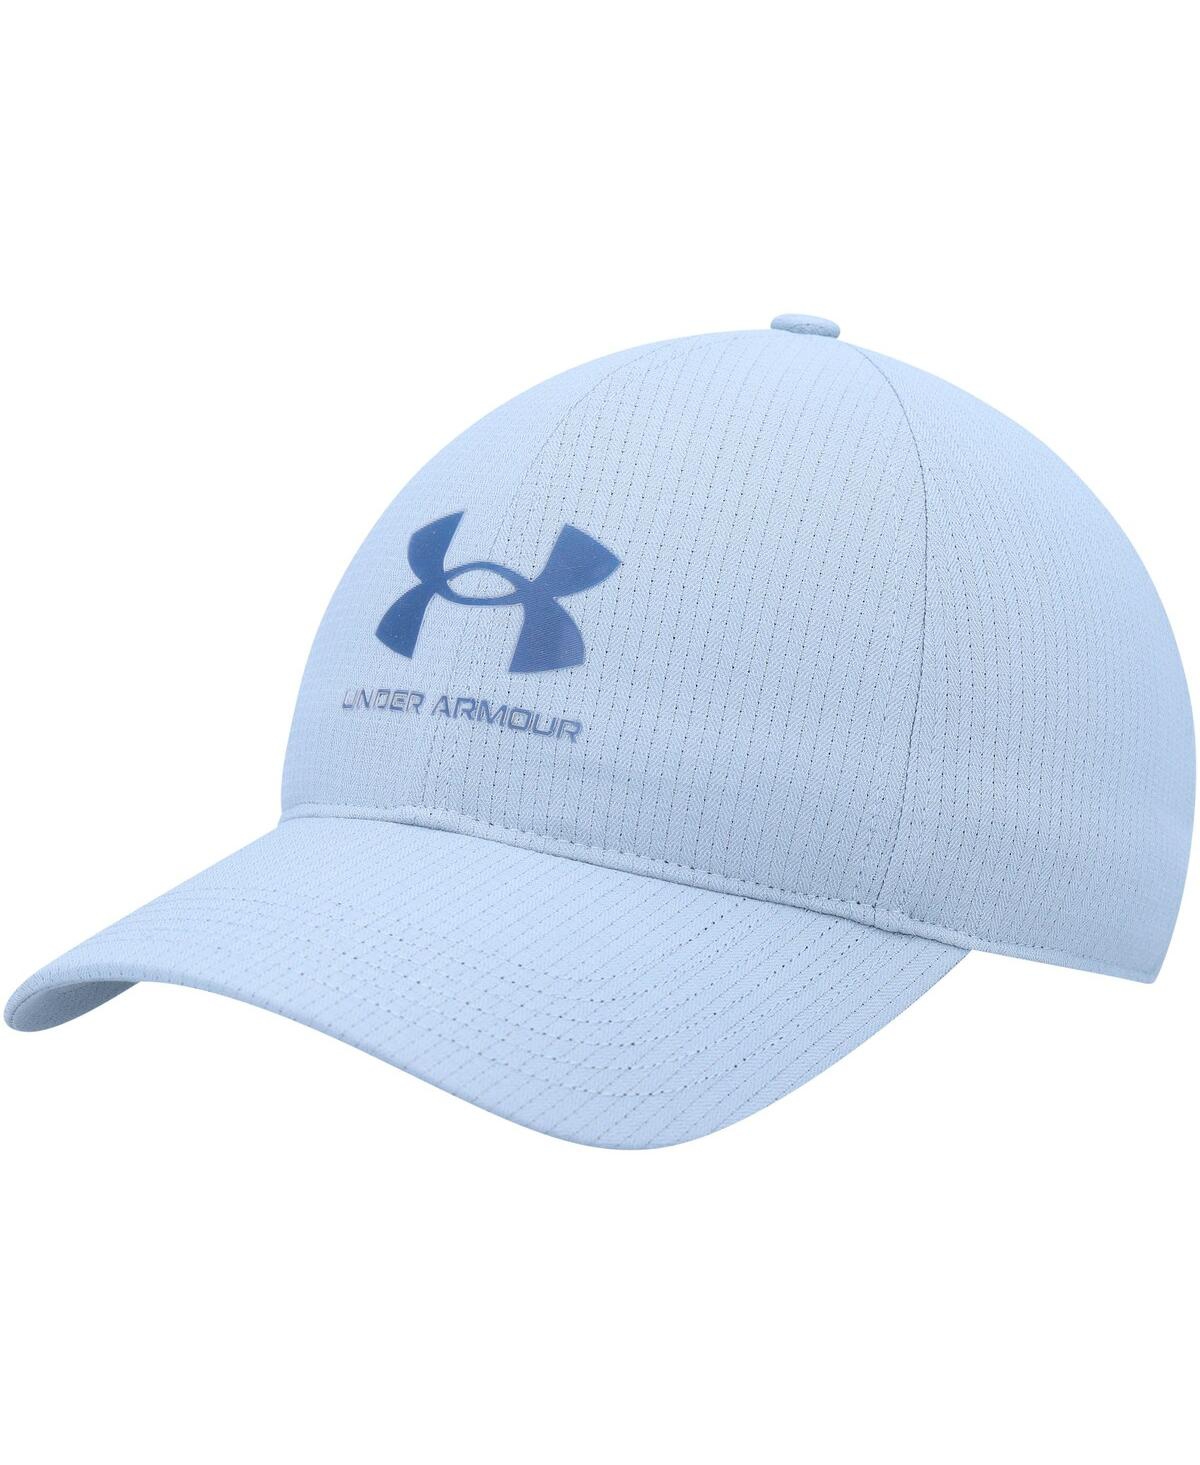 Under Armour Men's  Light Blue Performance Adjustable Hat